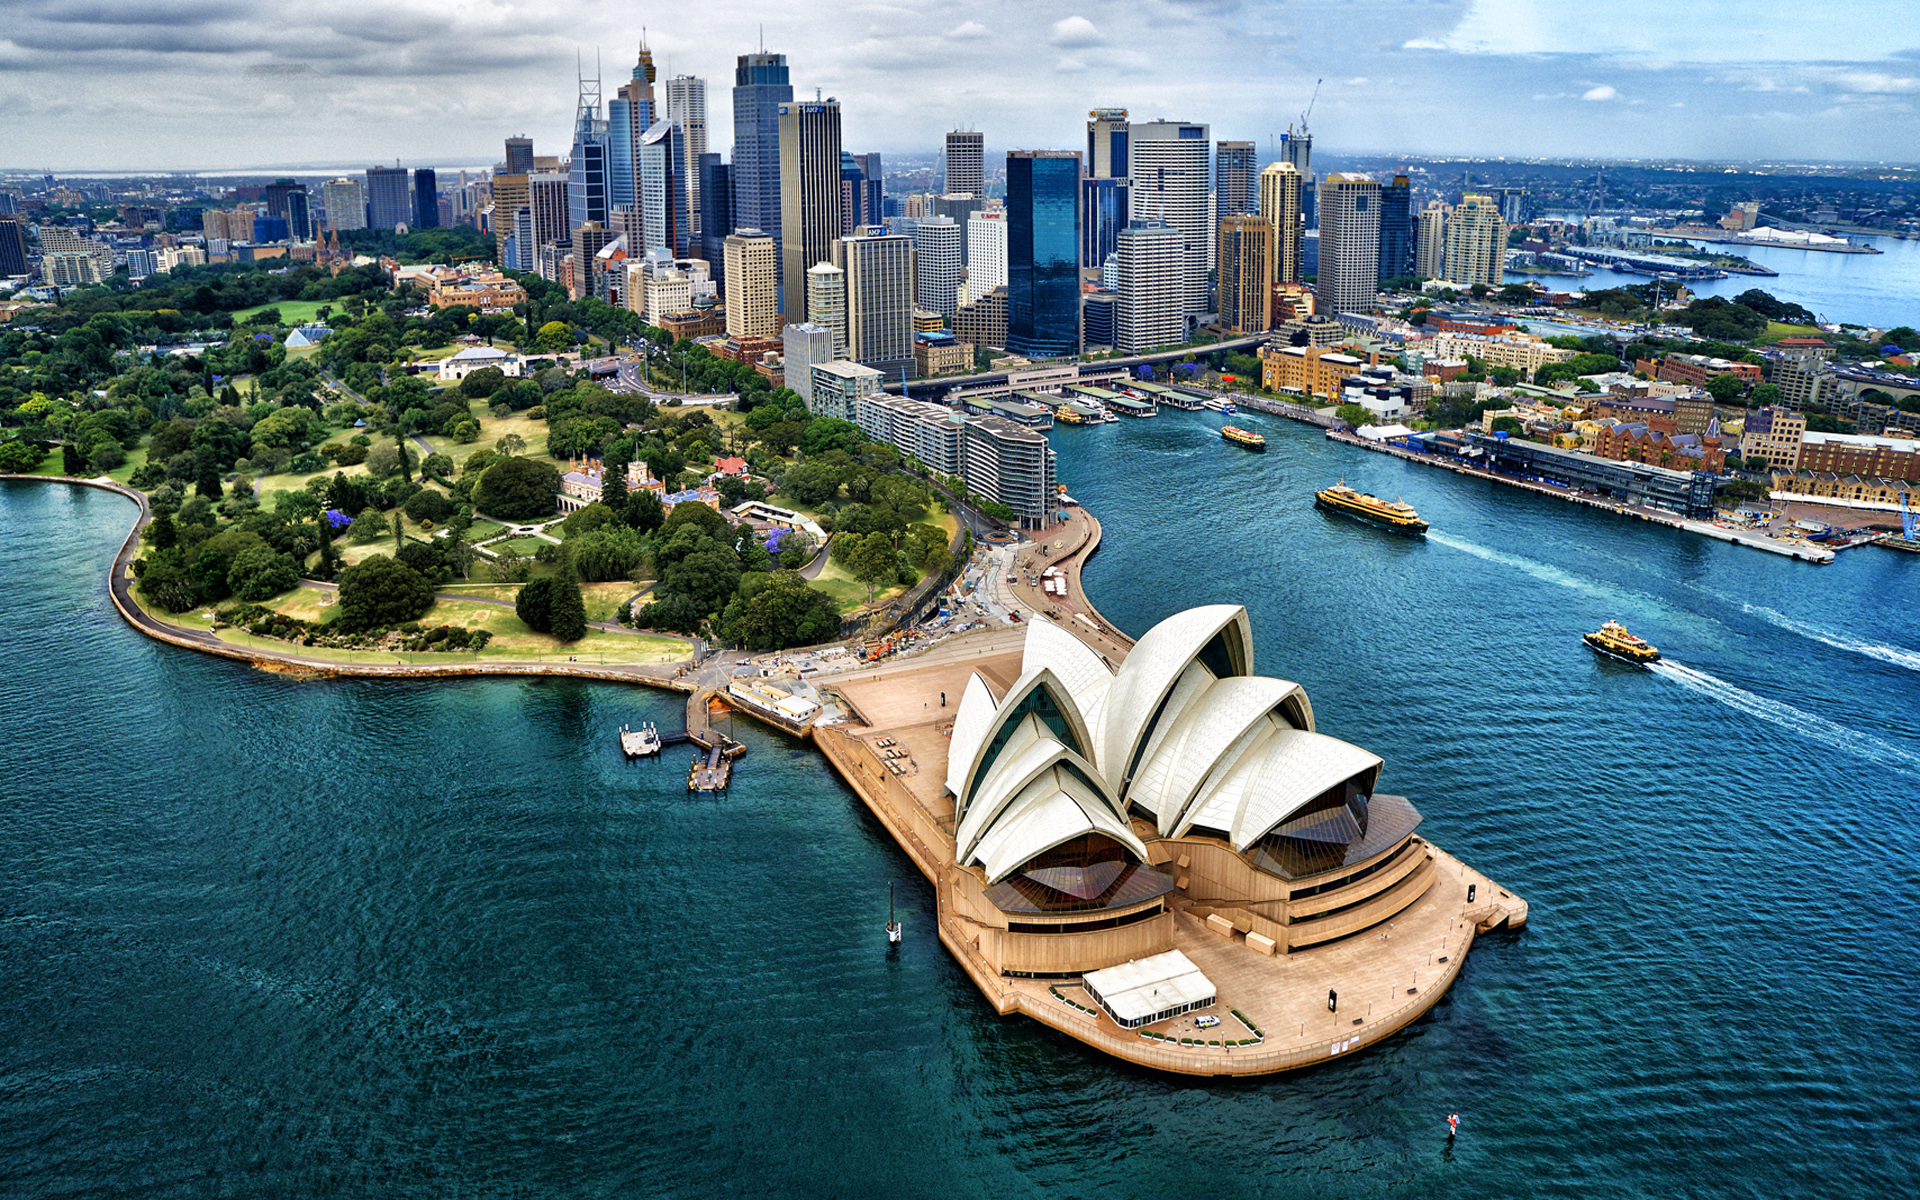 Sydney Australia Opera House HD Wallpaper Download For Mobile, Wallpaper13.com